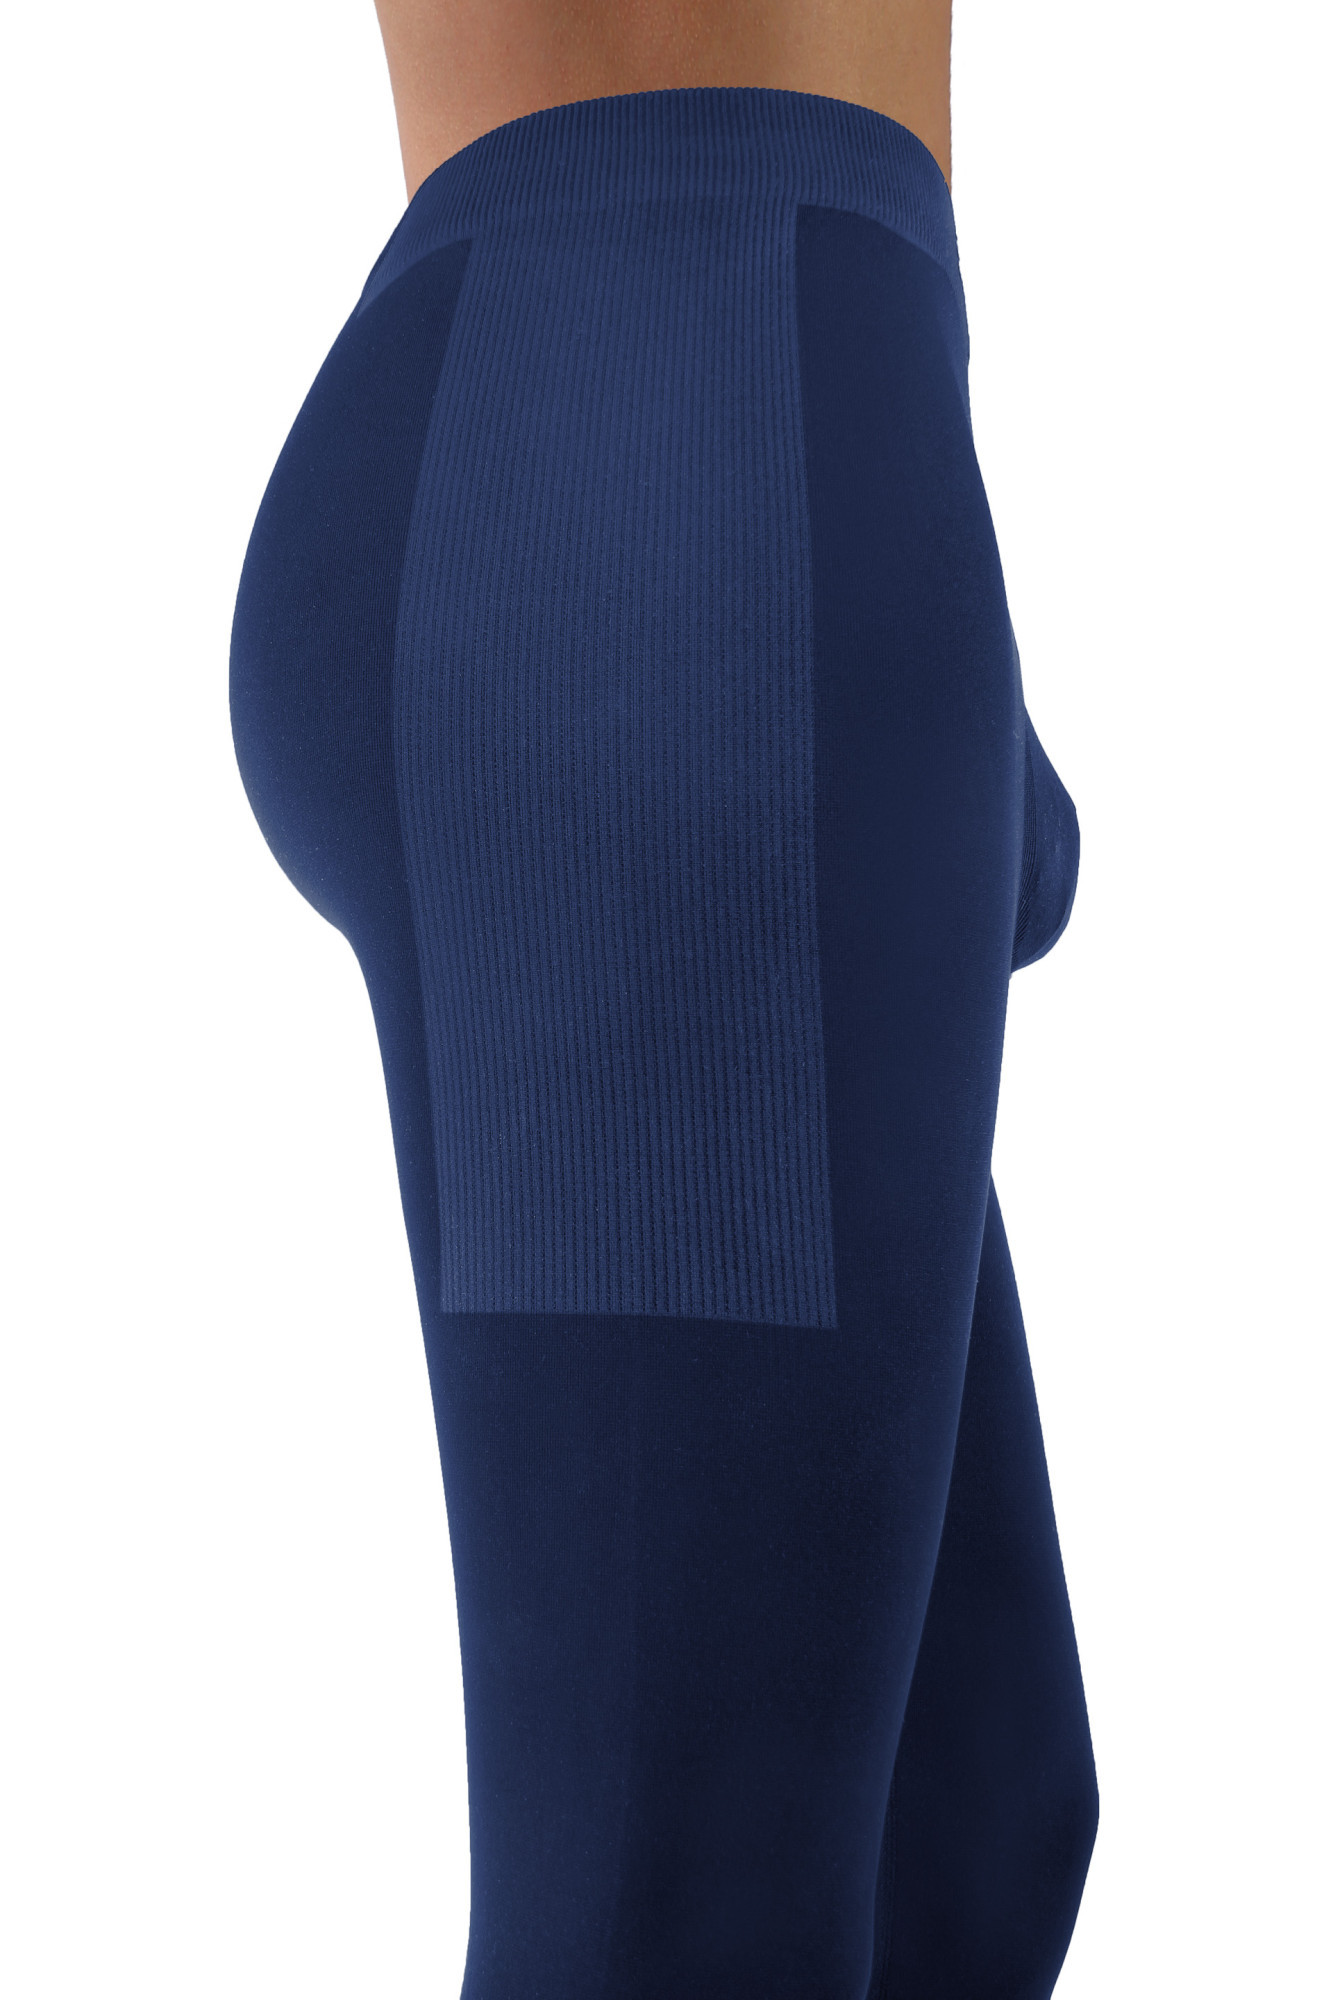 Kalhoty Sesto Senso Thermo CL42 Navy Blue Velikost: L/XL